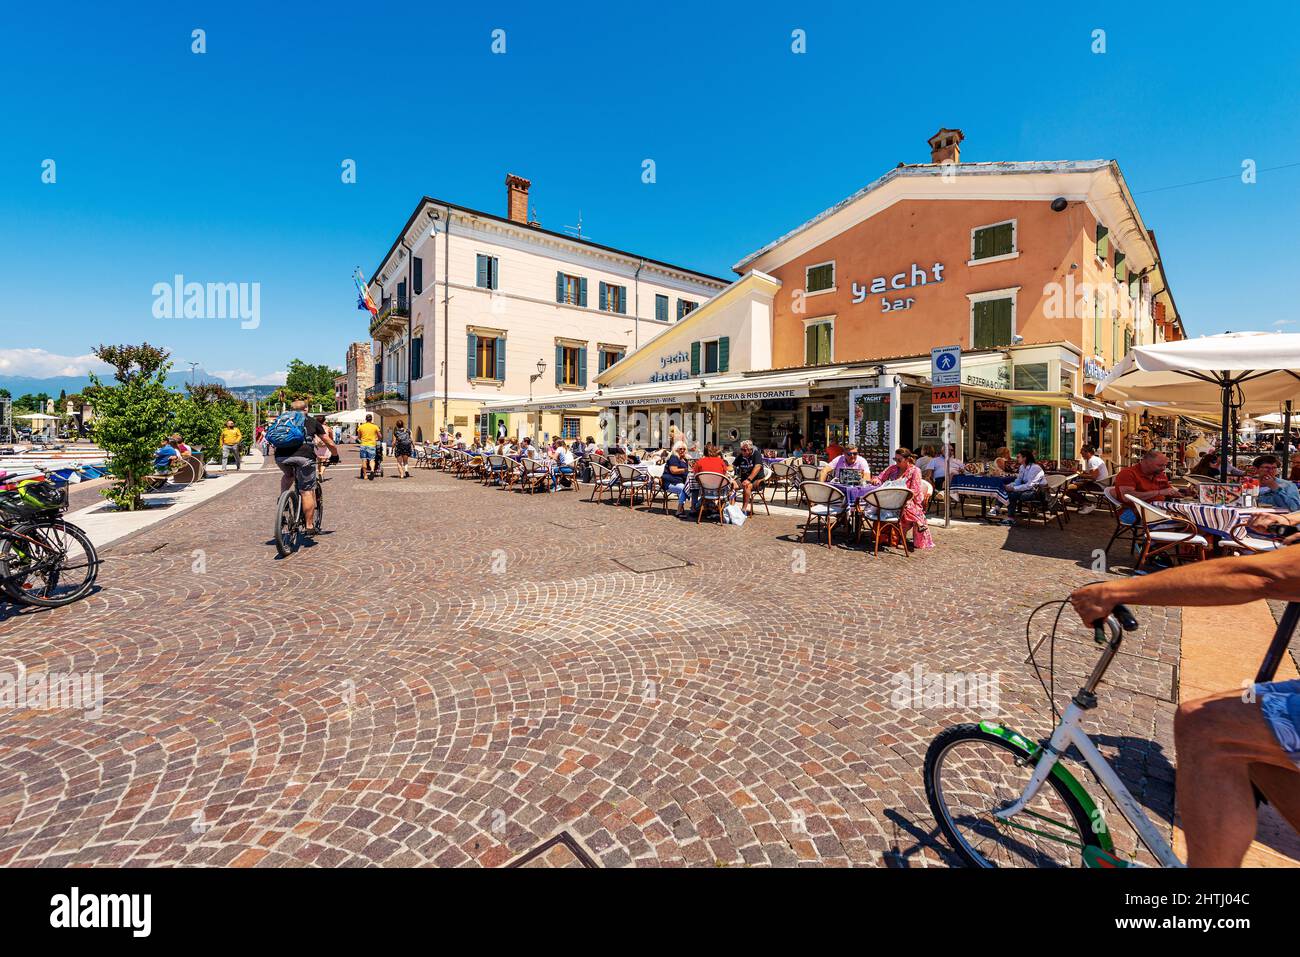 Downtown of Bardolino village, tourist resort on the coast of Lake Garda. Promenade with tourists, restaurants and pizzerias. Verona province, Italy. Stock Photo